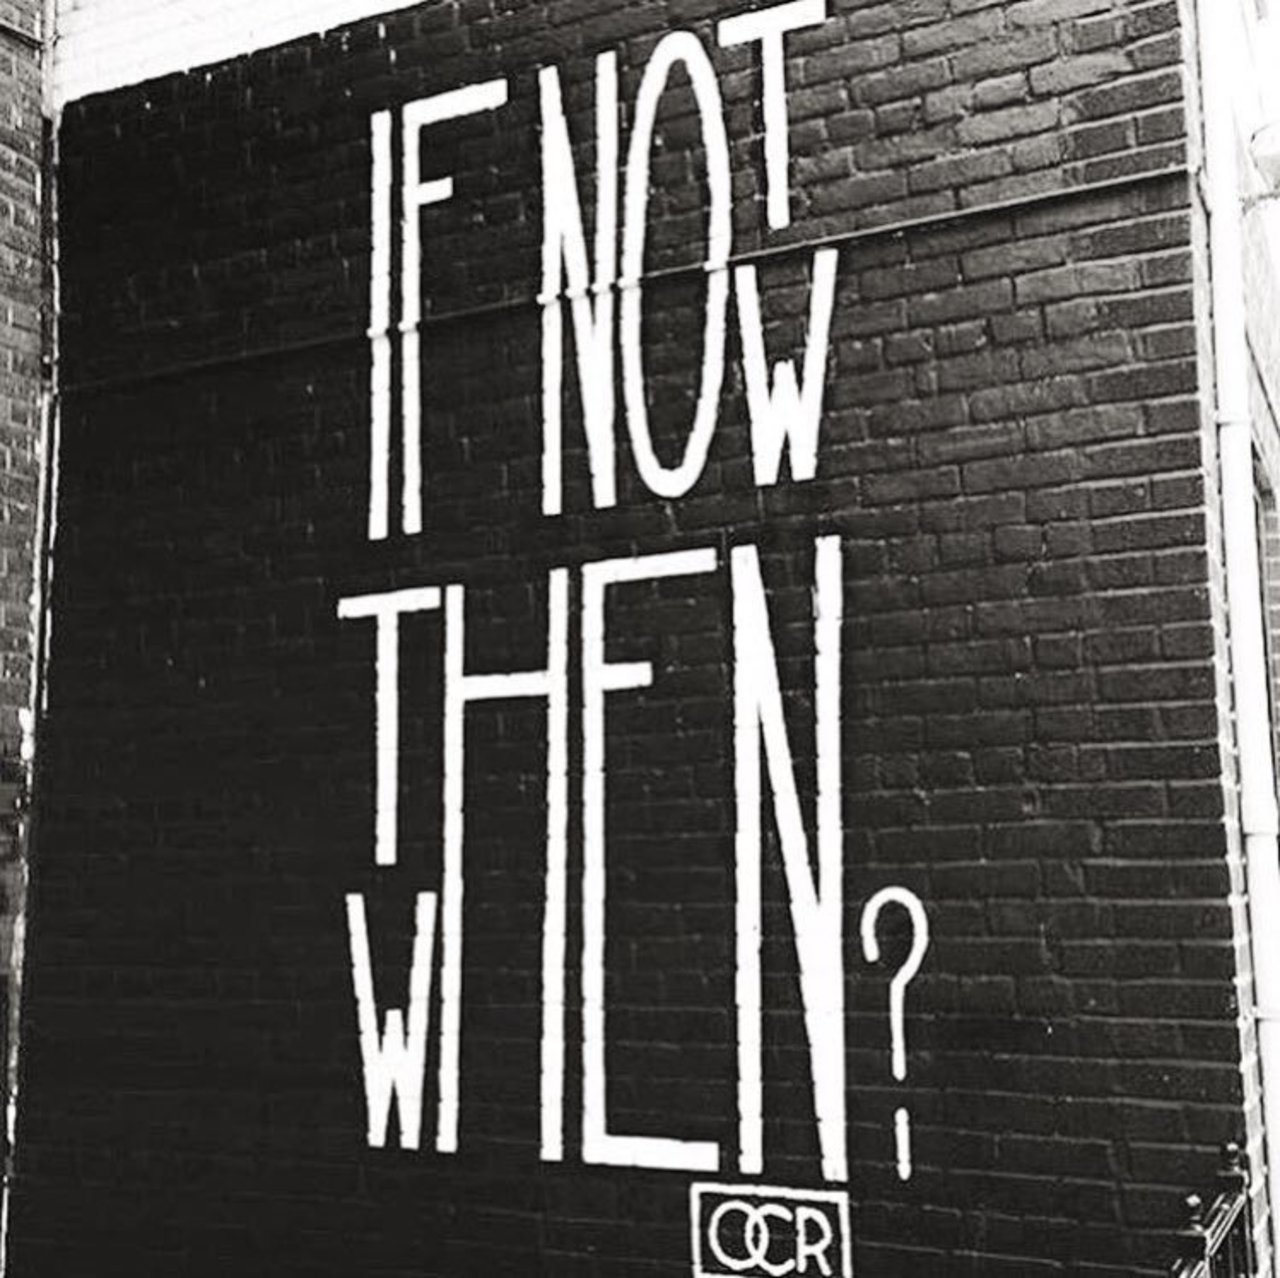 "If Not Now Then When?"By OCR#streetart #art #graffiti #mural https://t.co/LQc0WjvJbY